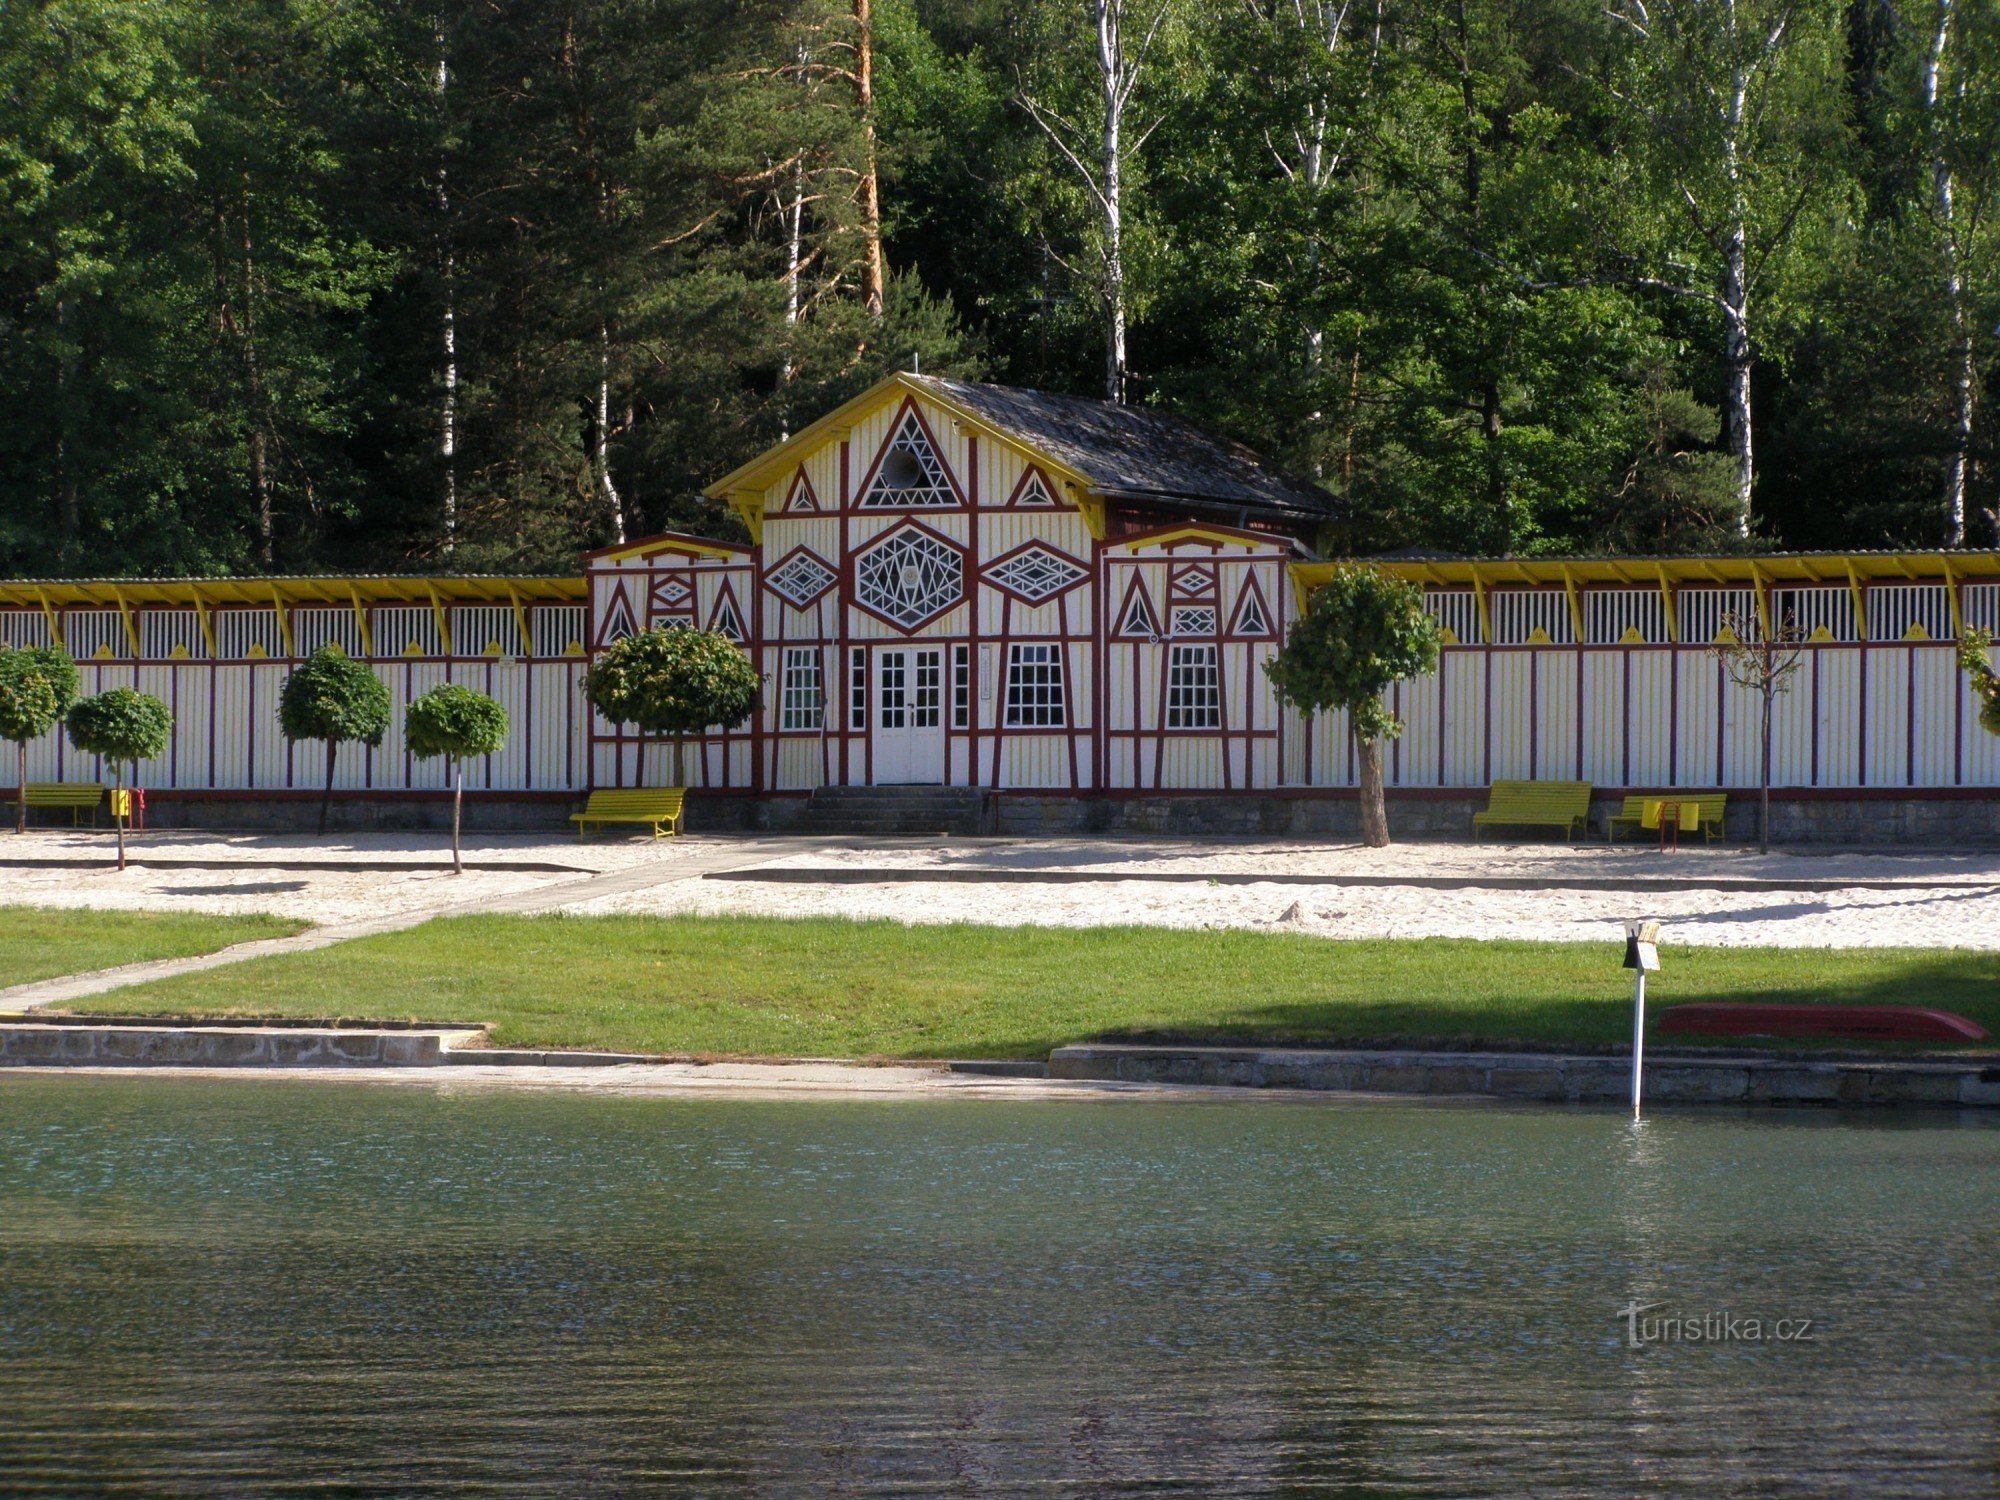 Hořice - Schwimmbad Dachova